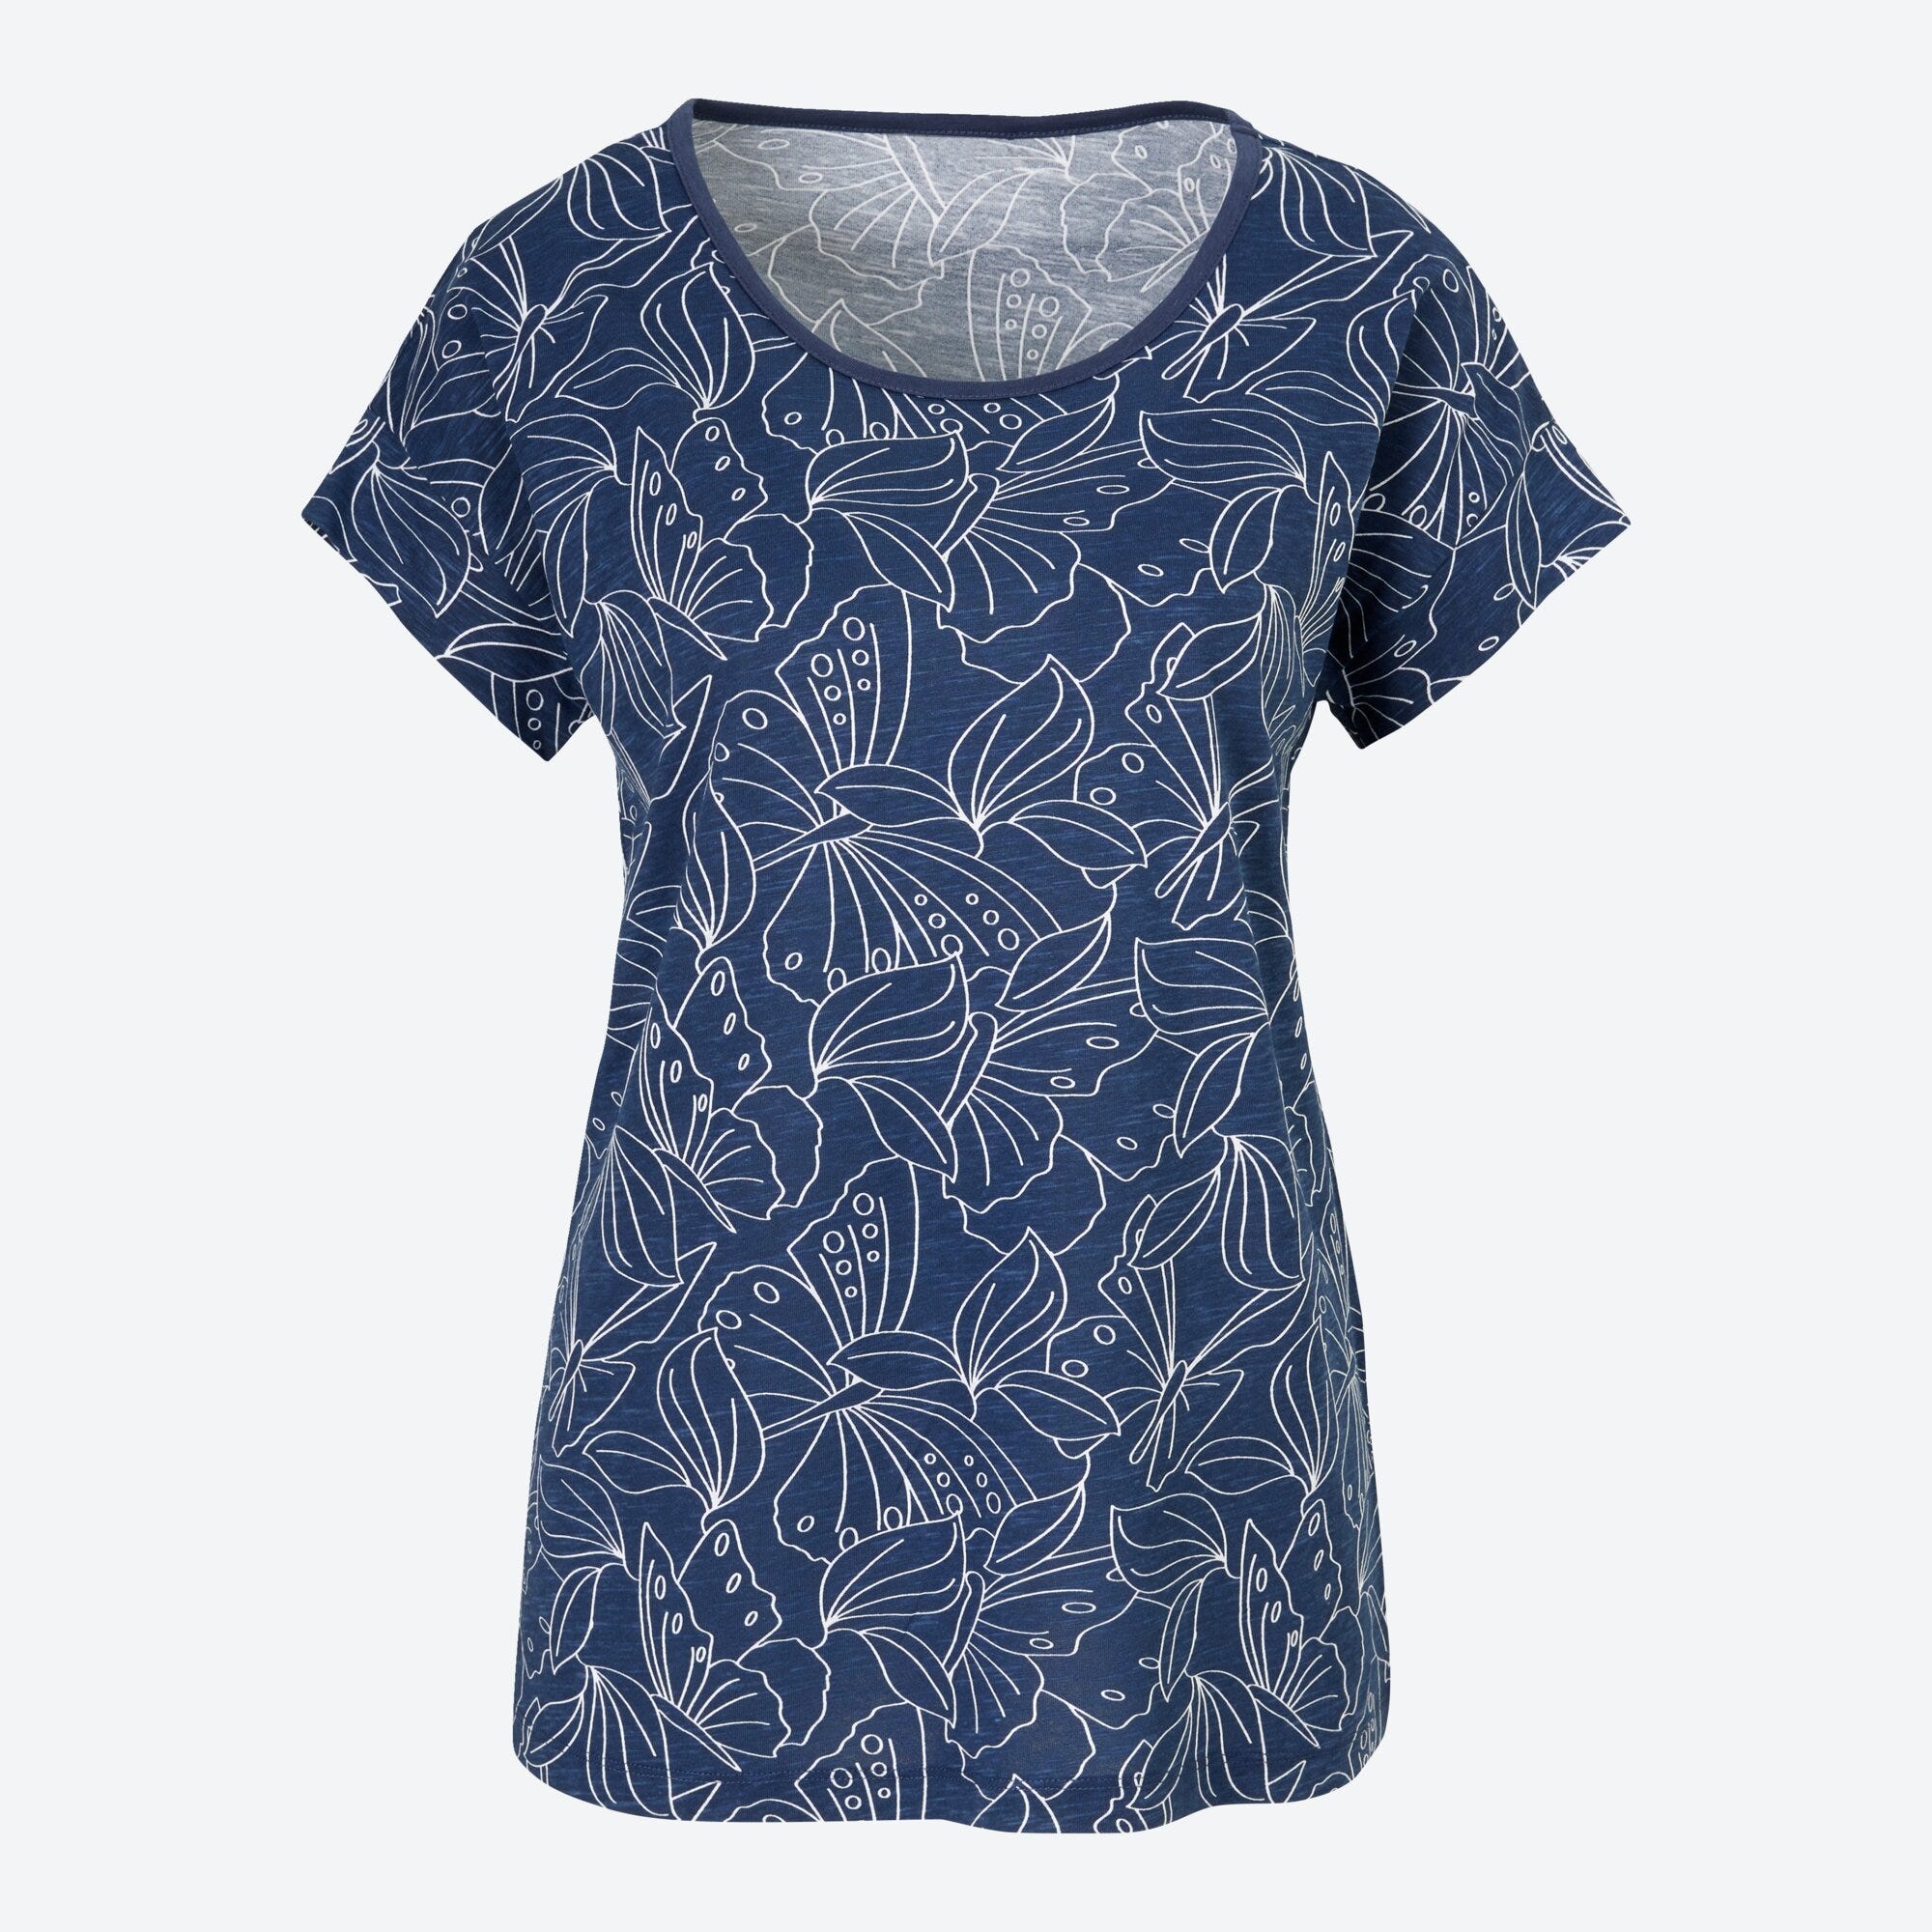 Damen-T-Shirt mit floralem Design